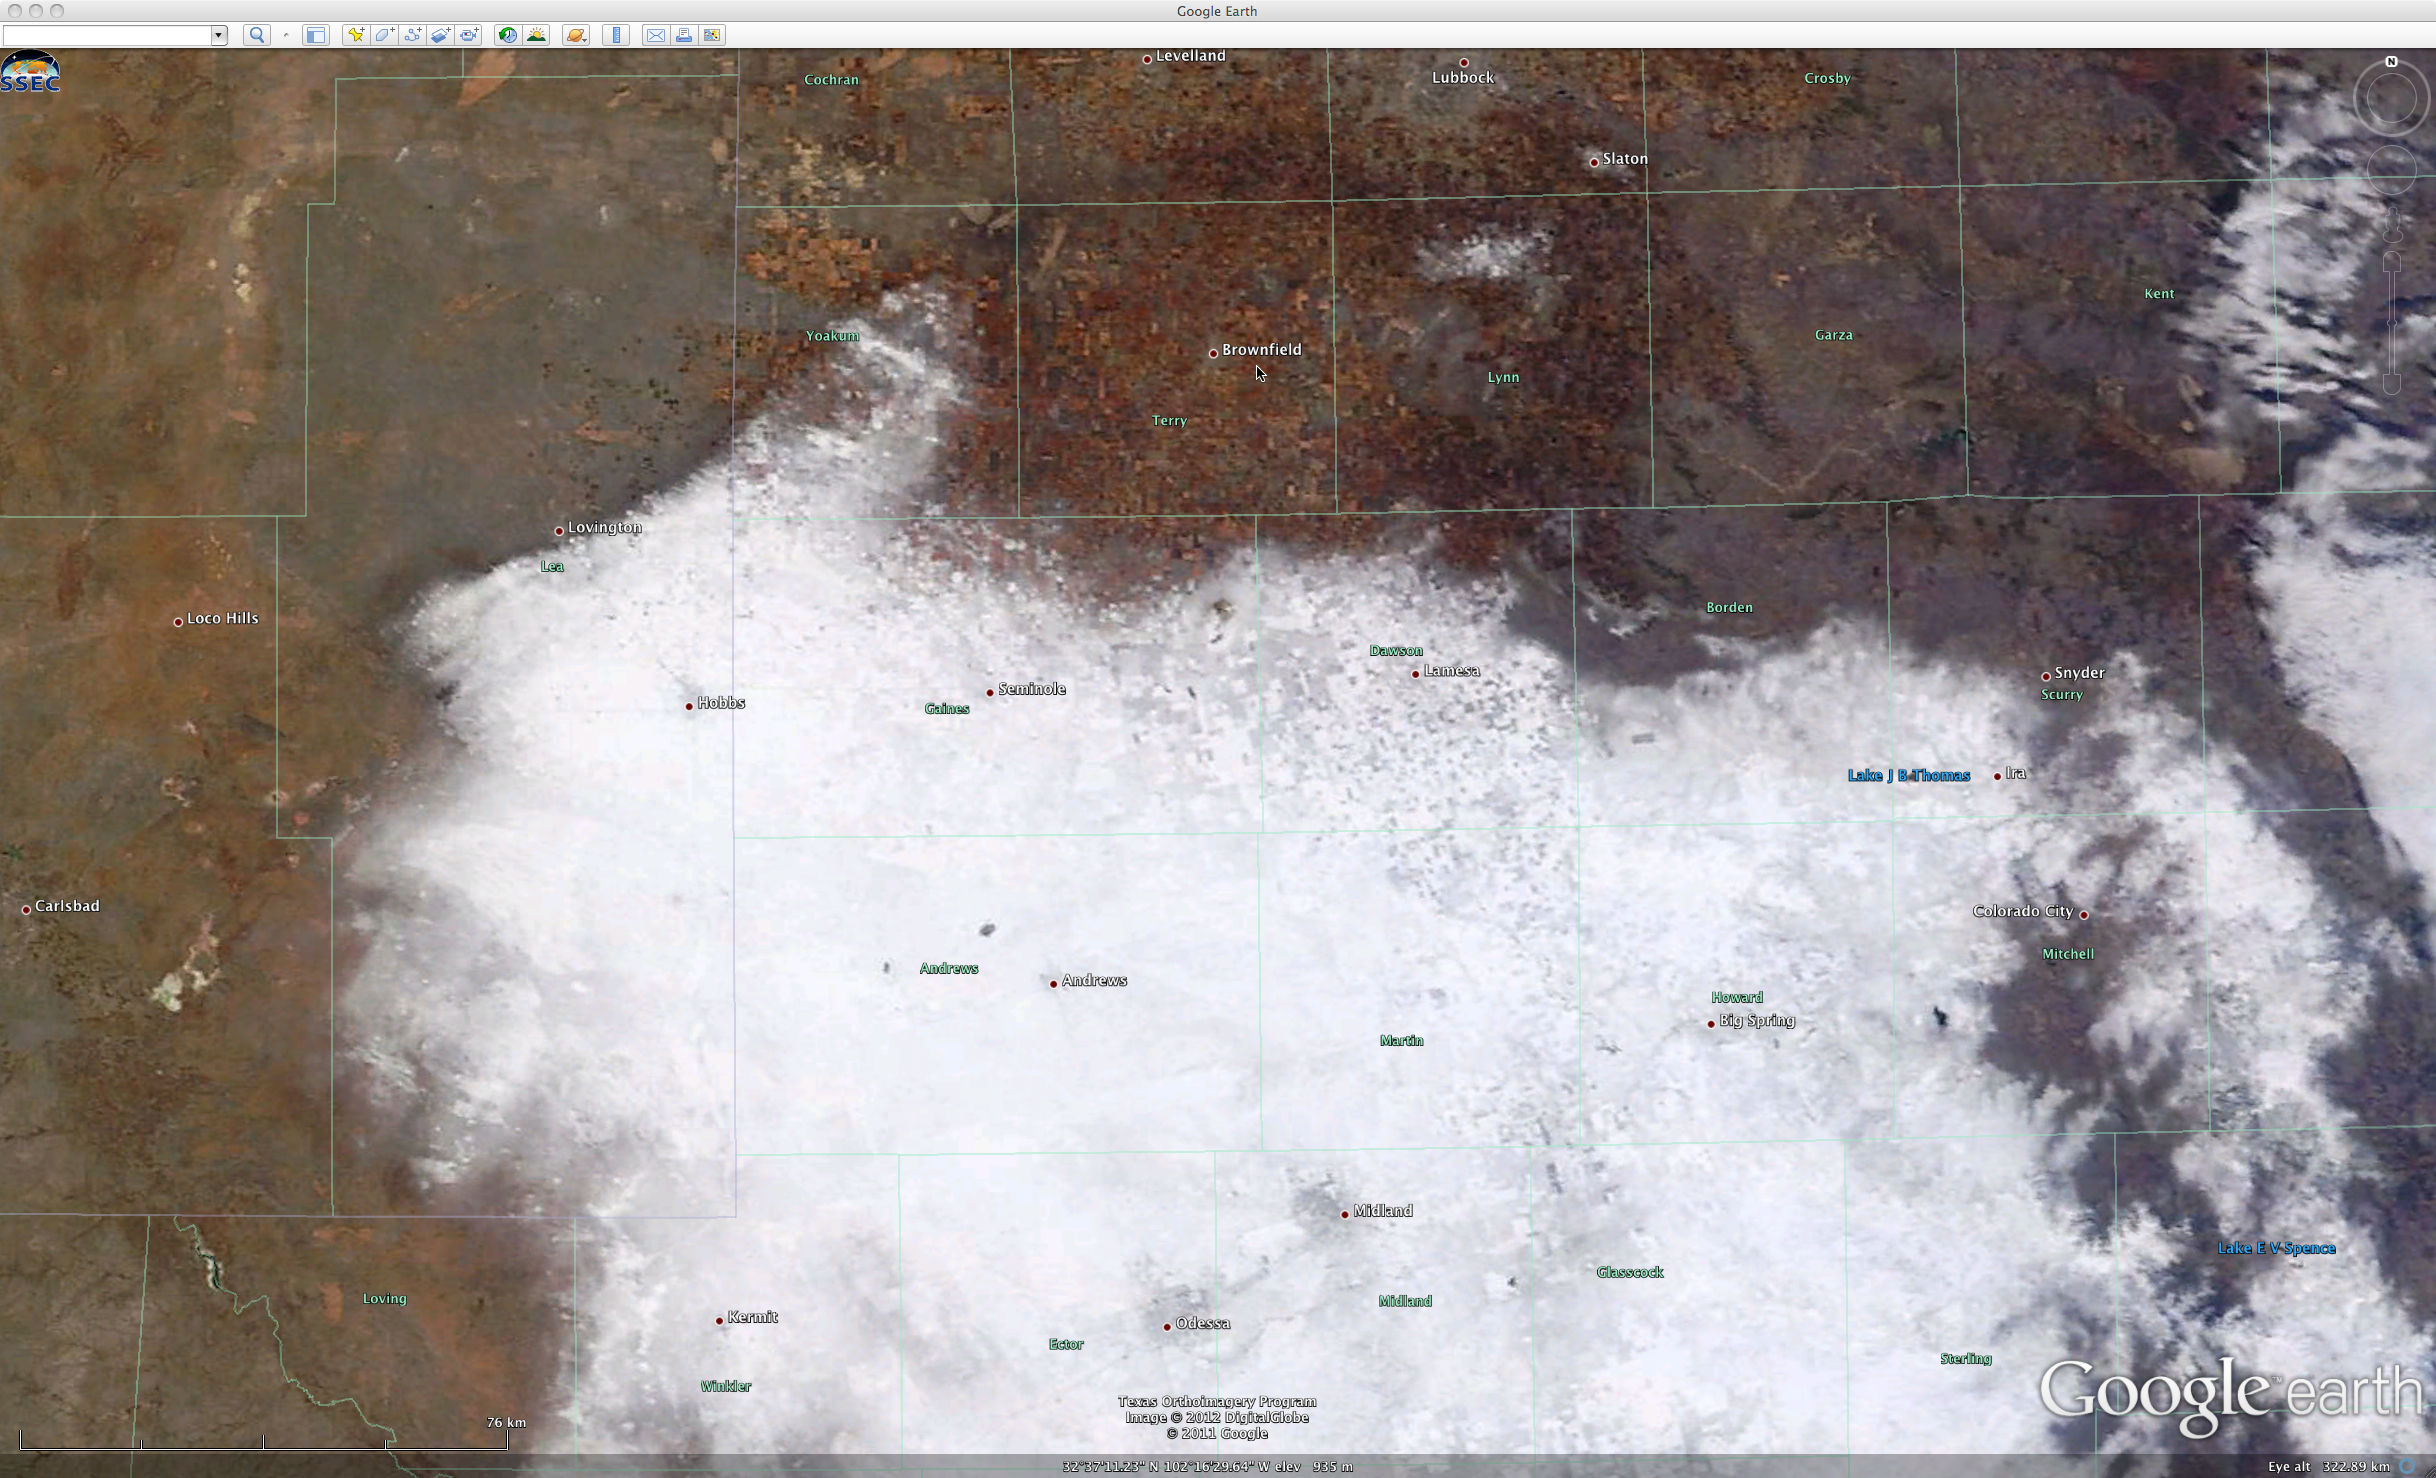 MODIS true color image (viewed using Google Earth)